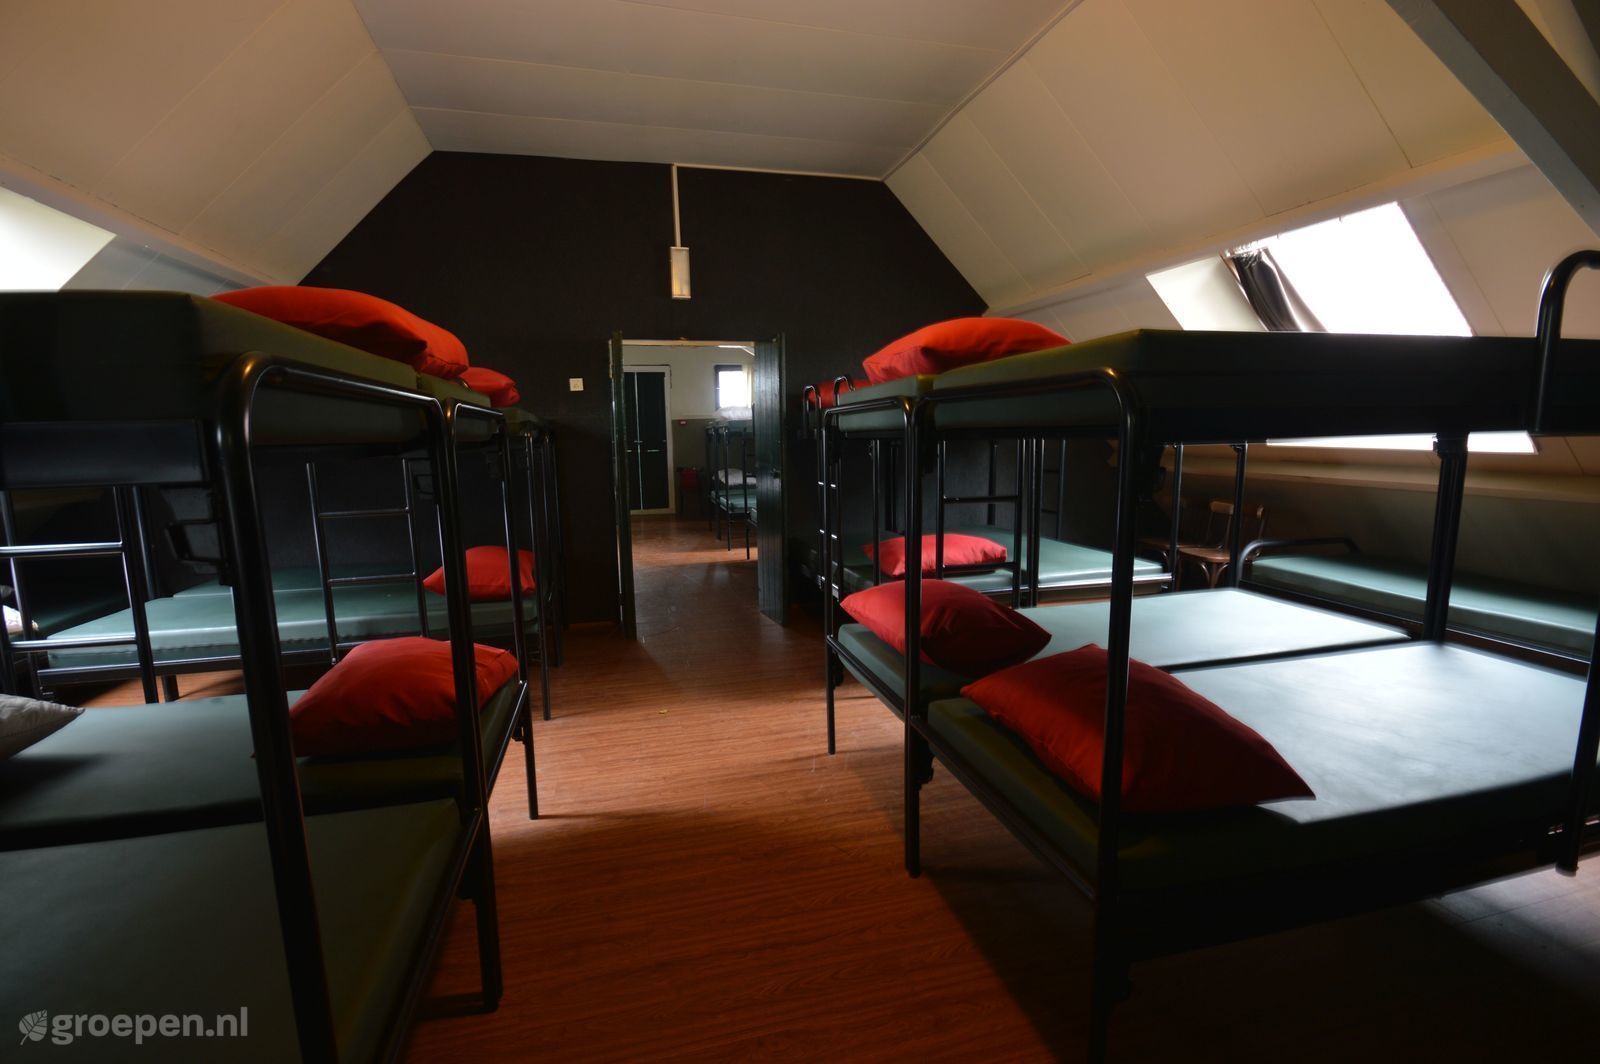 Group accommodation Bodegraven